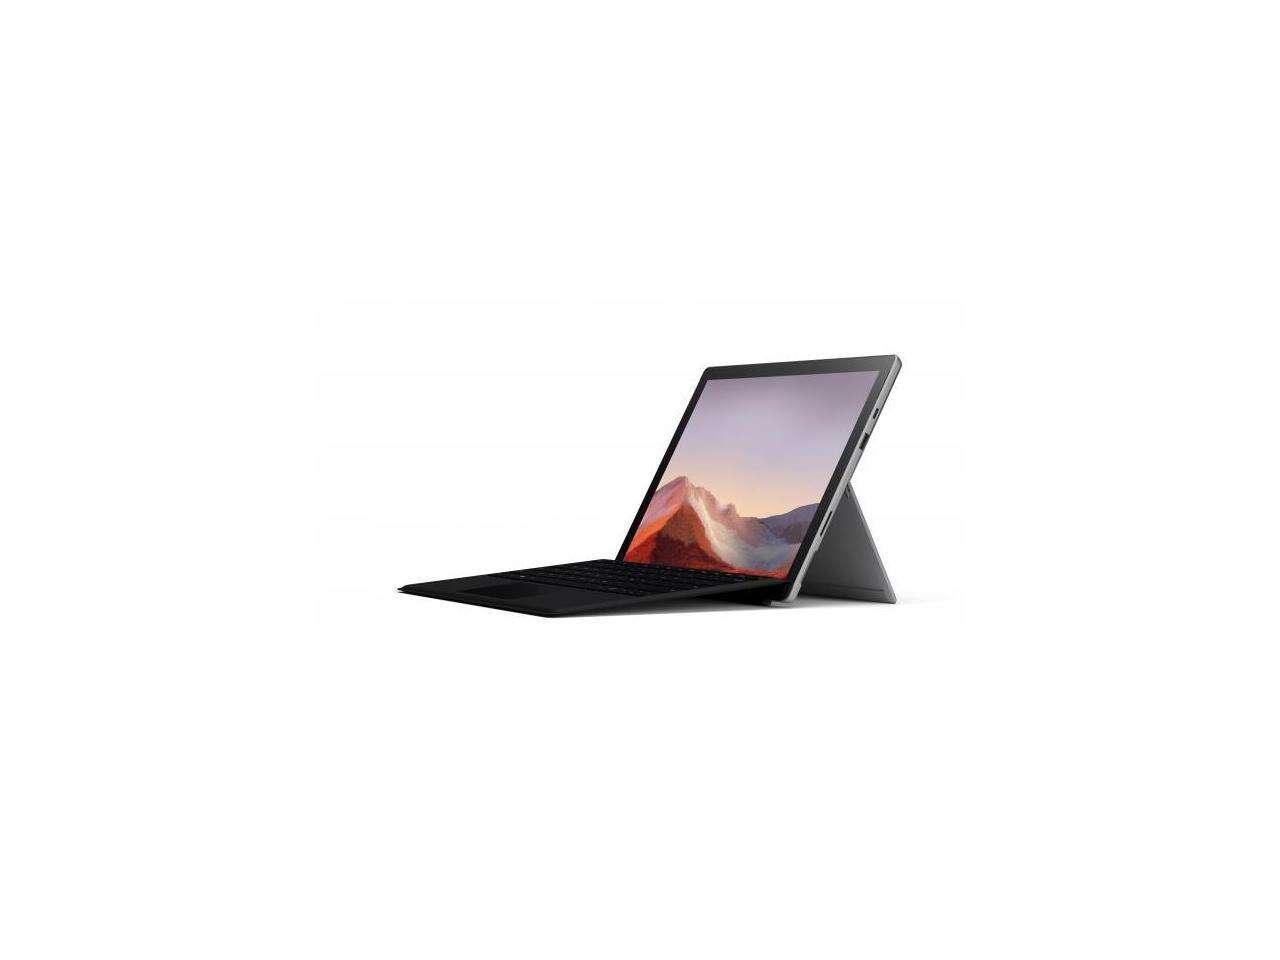 Microsoft Surface Pro 7 i5 8GB 128GB Platinum + Microsoft Surface Type Cover Black - 10th Gen i5-1035G4 Quad-core - Black Surface Type Cover included - Laptop, tablet, or studio mode - Large Glass Tra